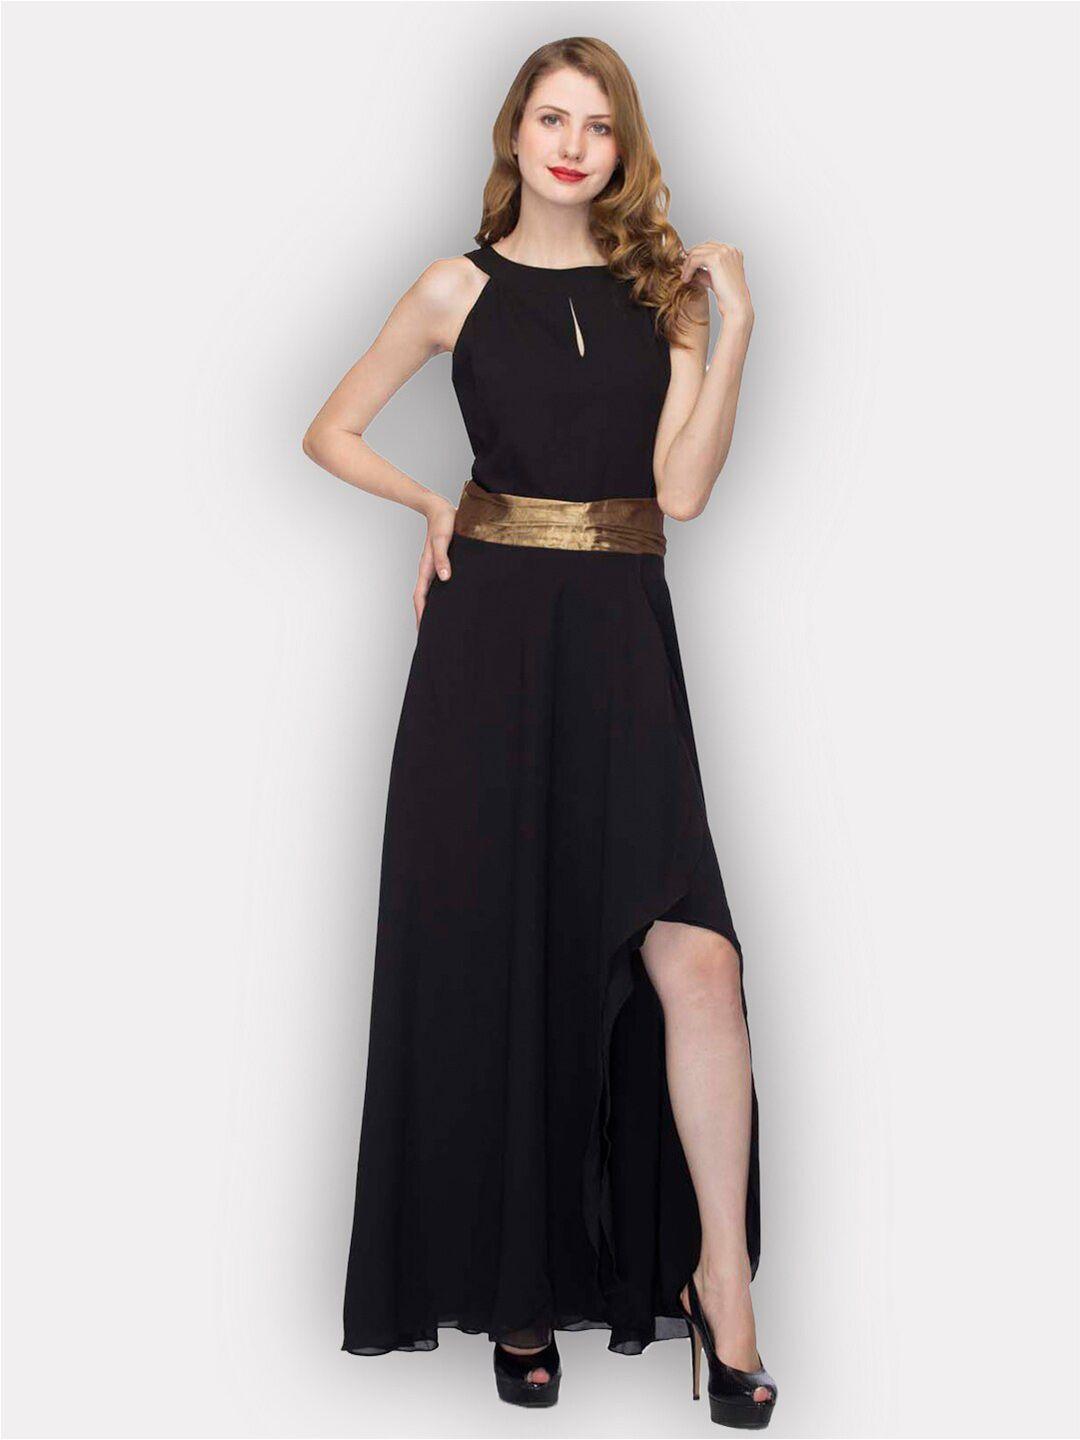 ursense black georgette maxi dress